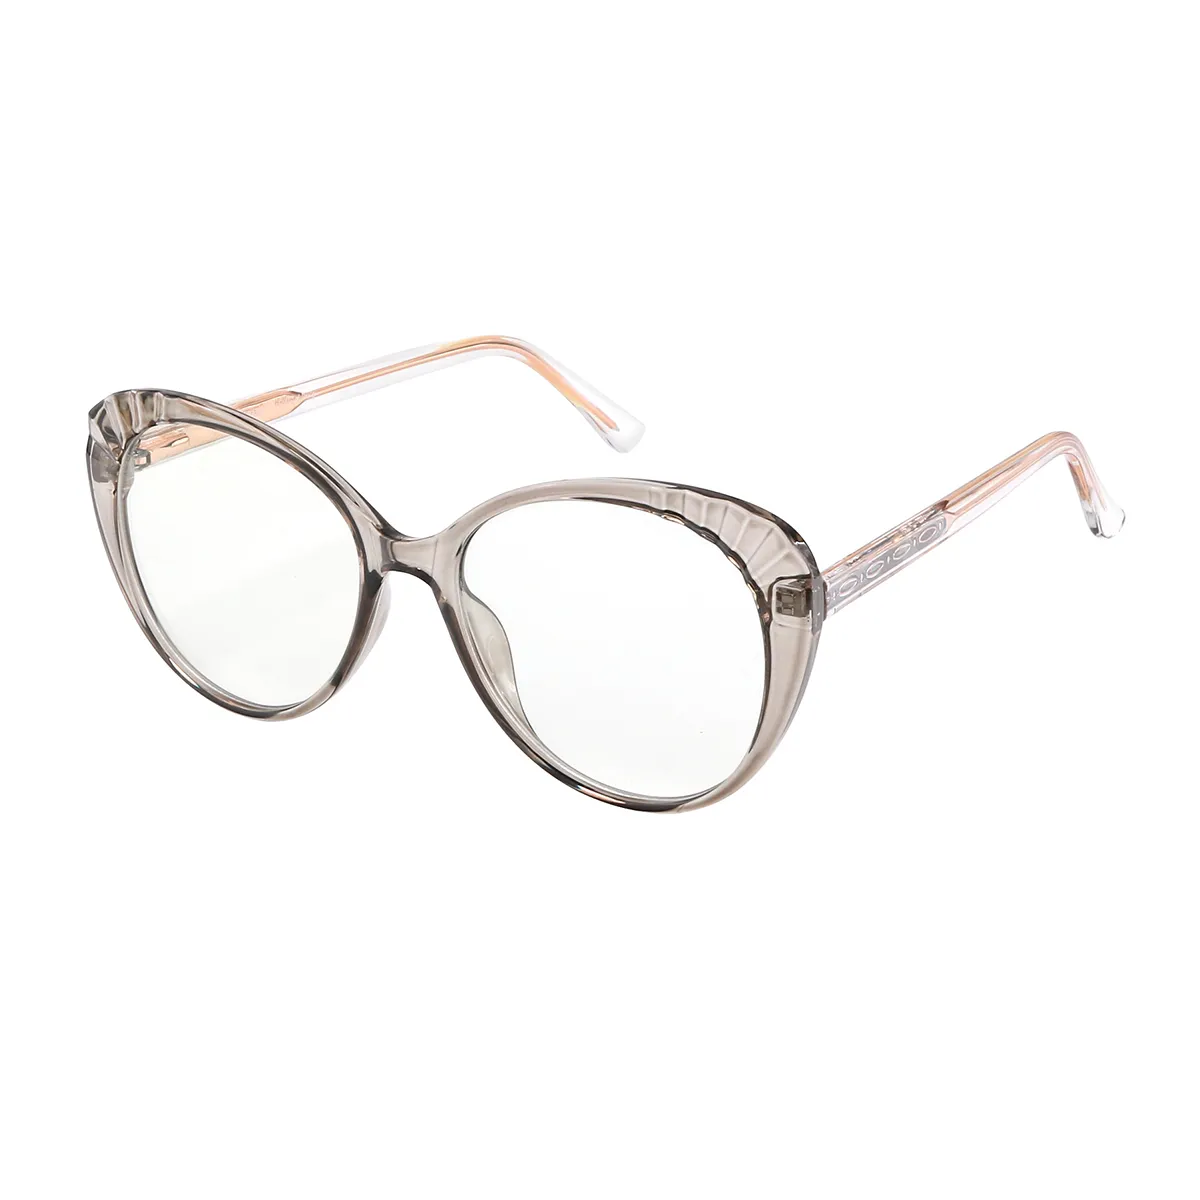 Ayre - Oval Grey Glasses for Women